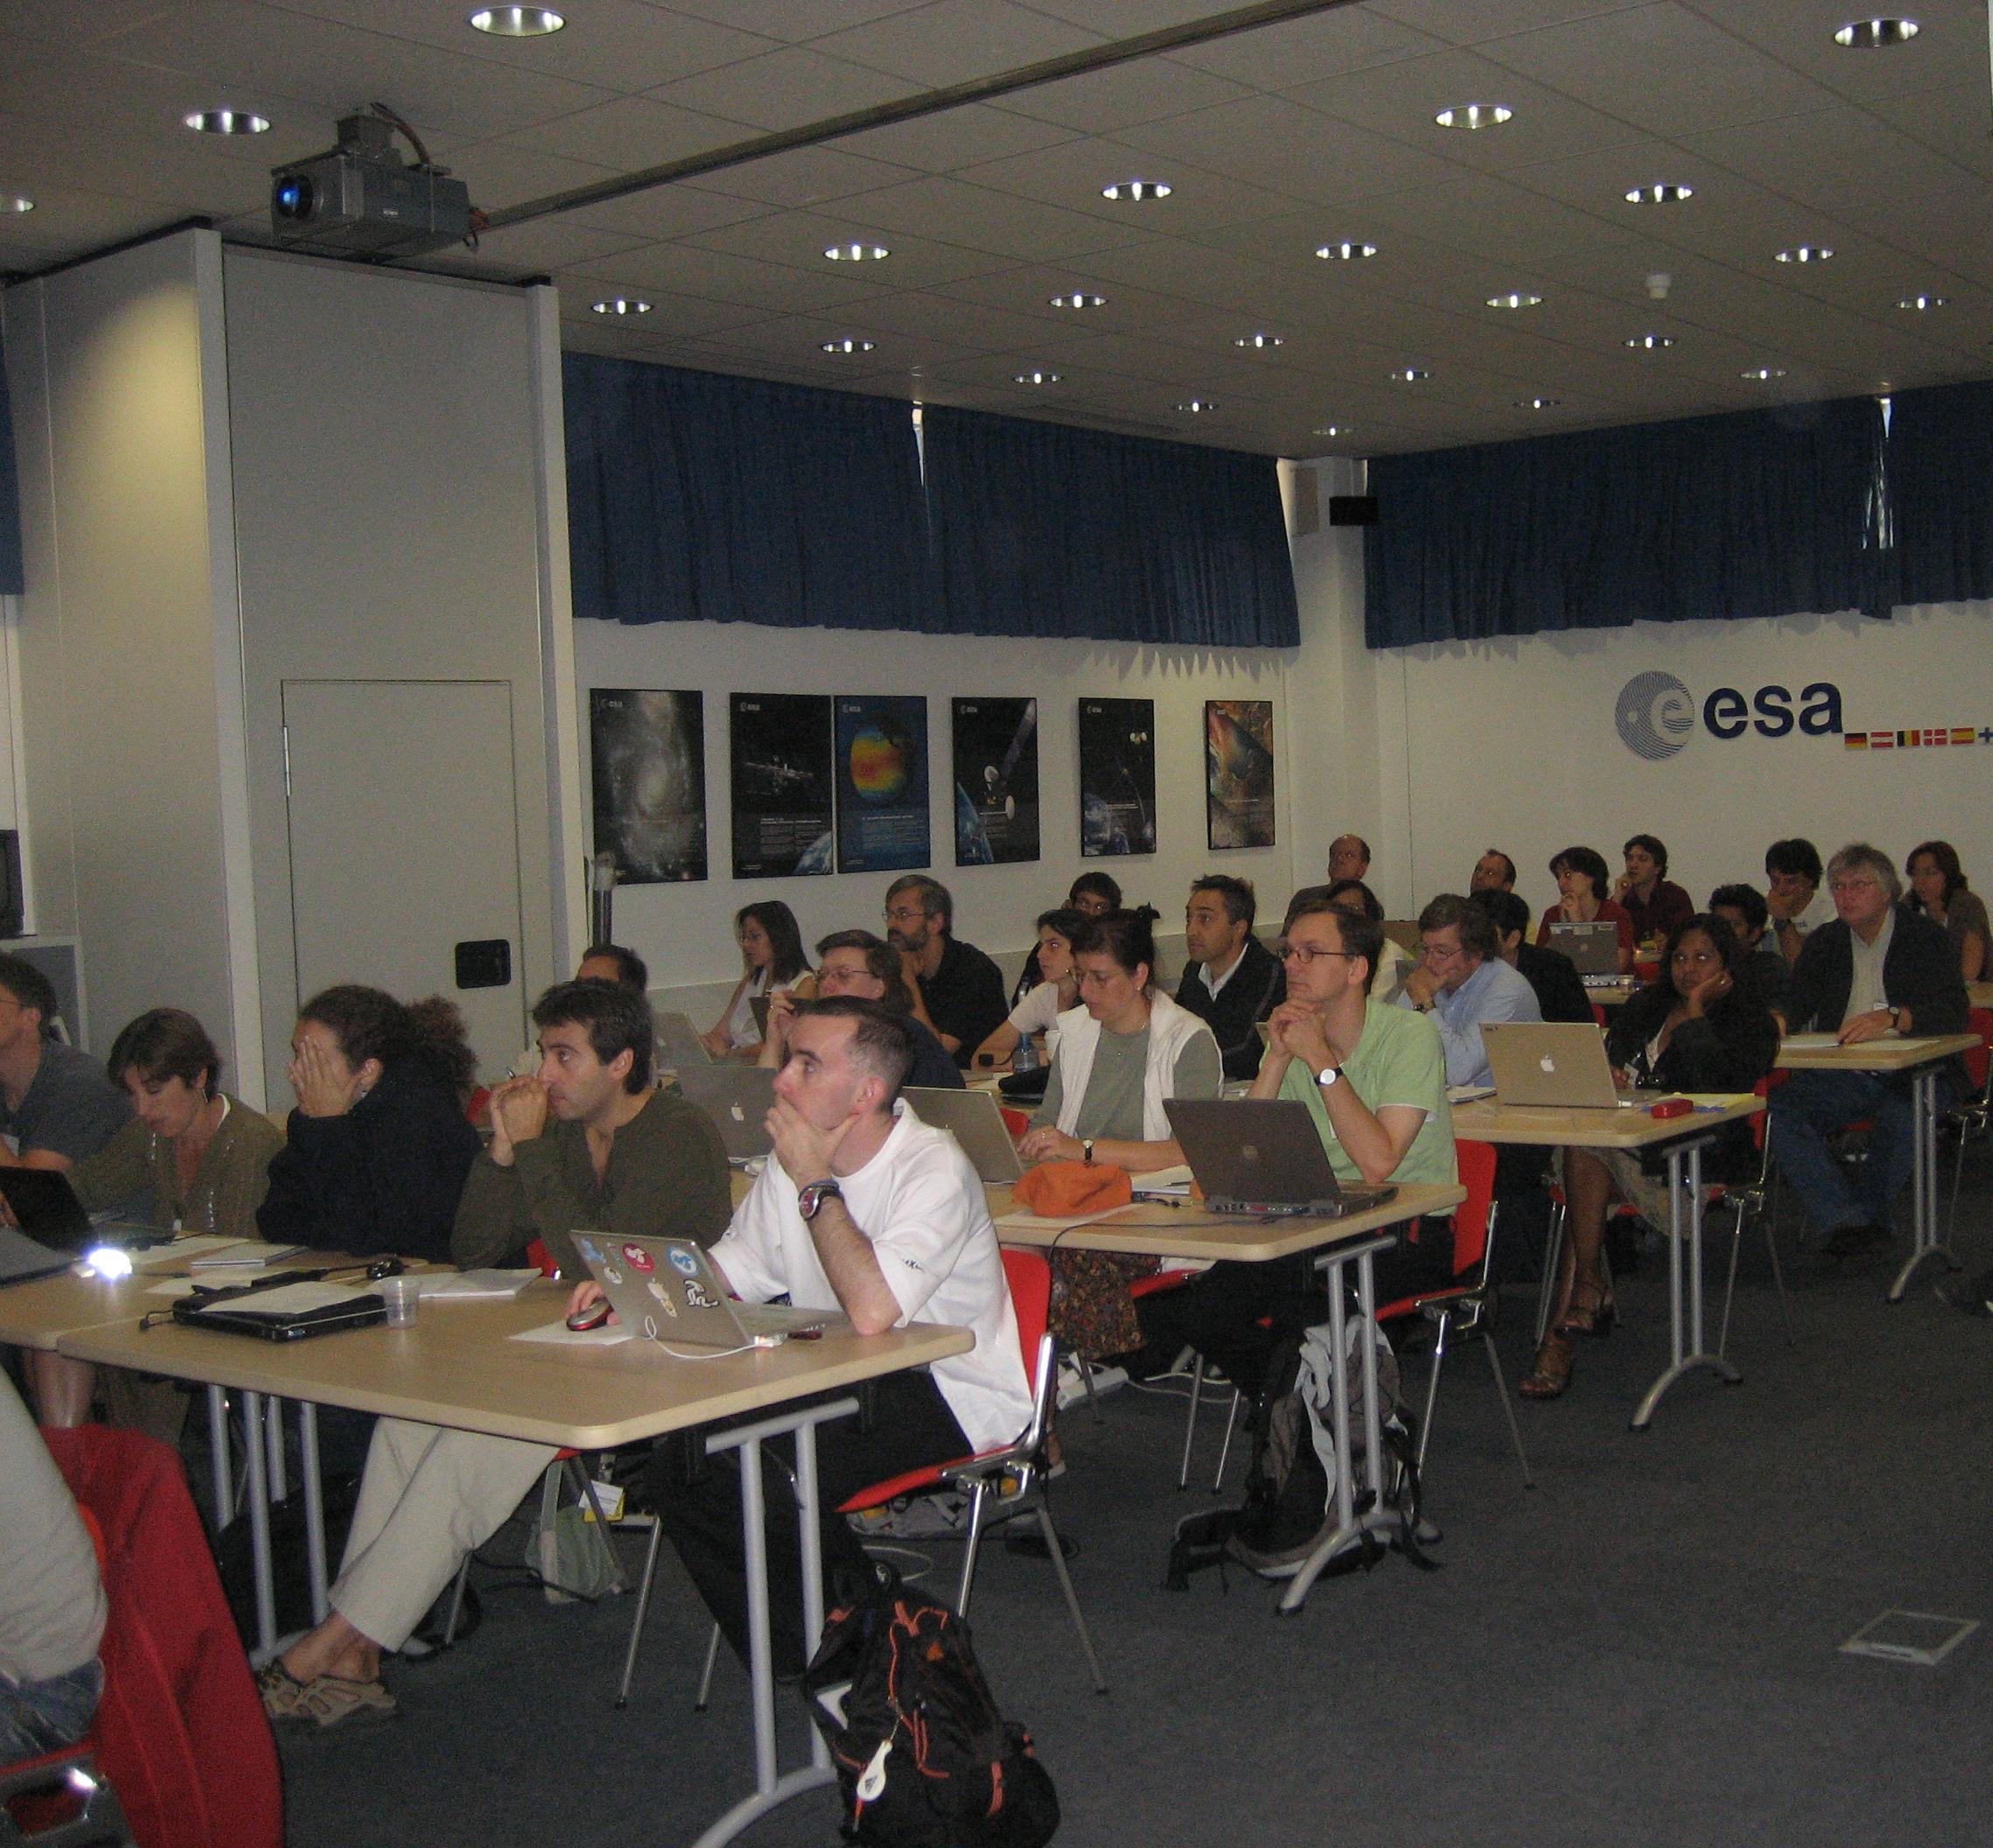 Herschel observation planning workshop participants